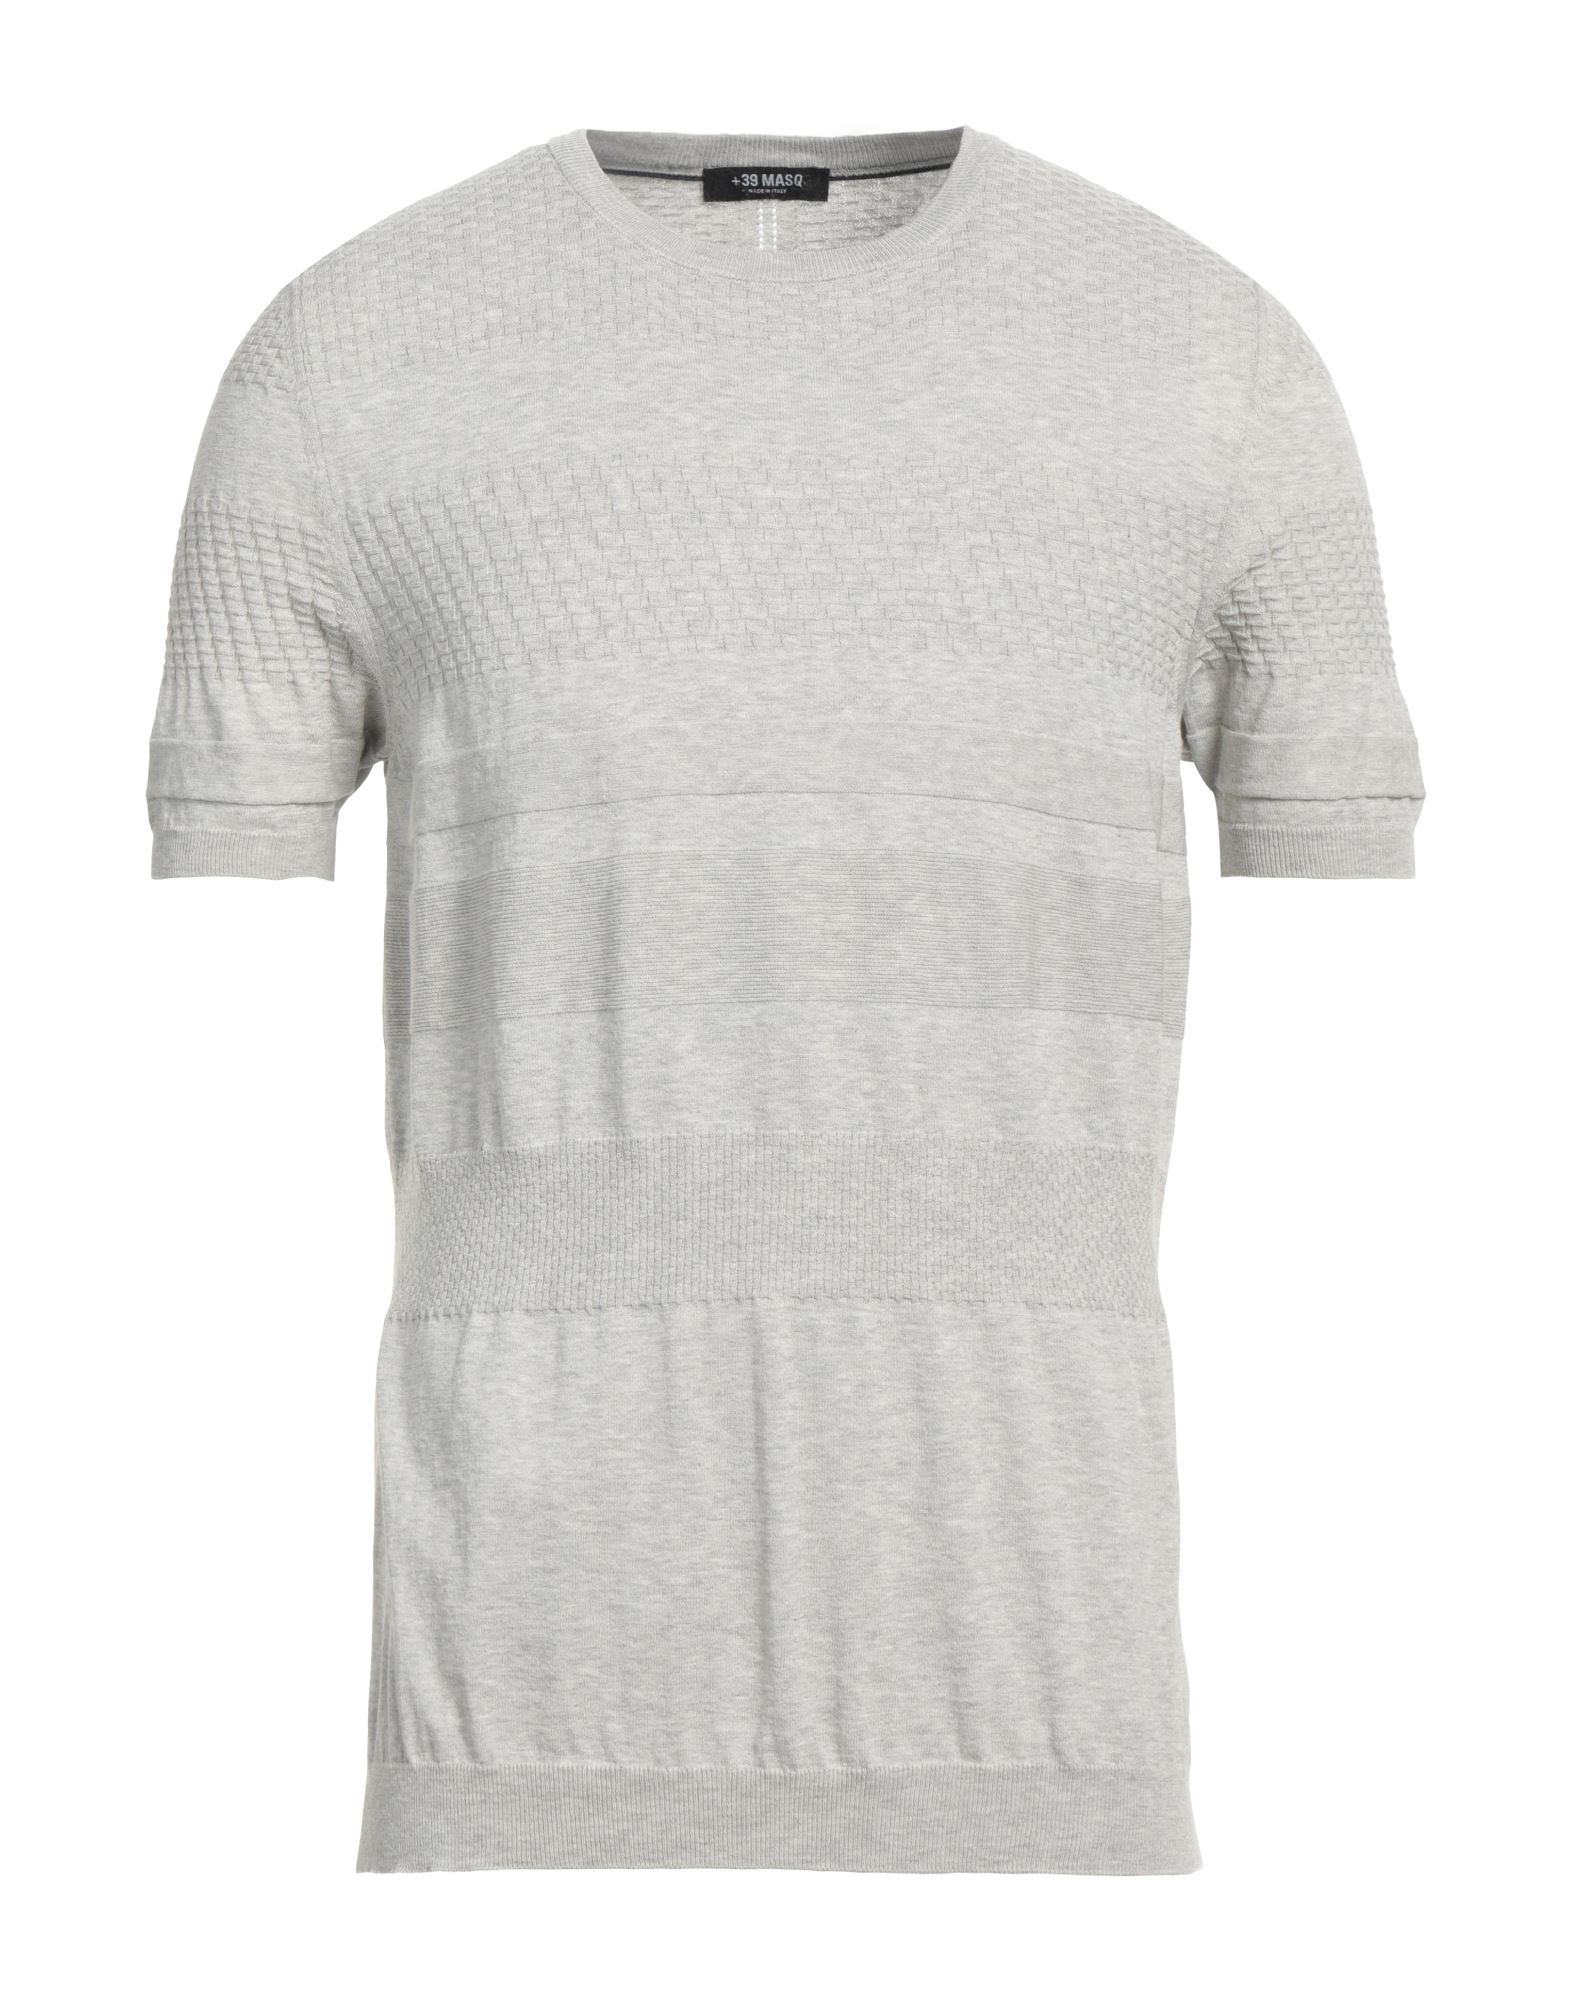 +39 Masq Man Sweater Light Grey Size 3xl Cotton